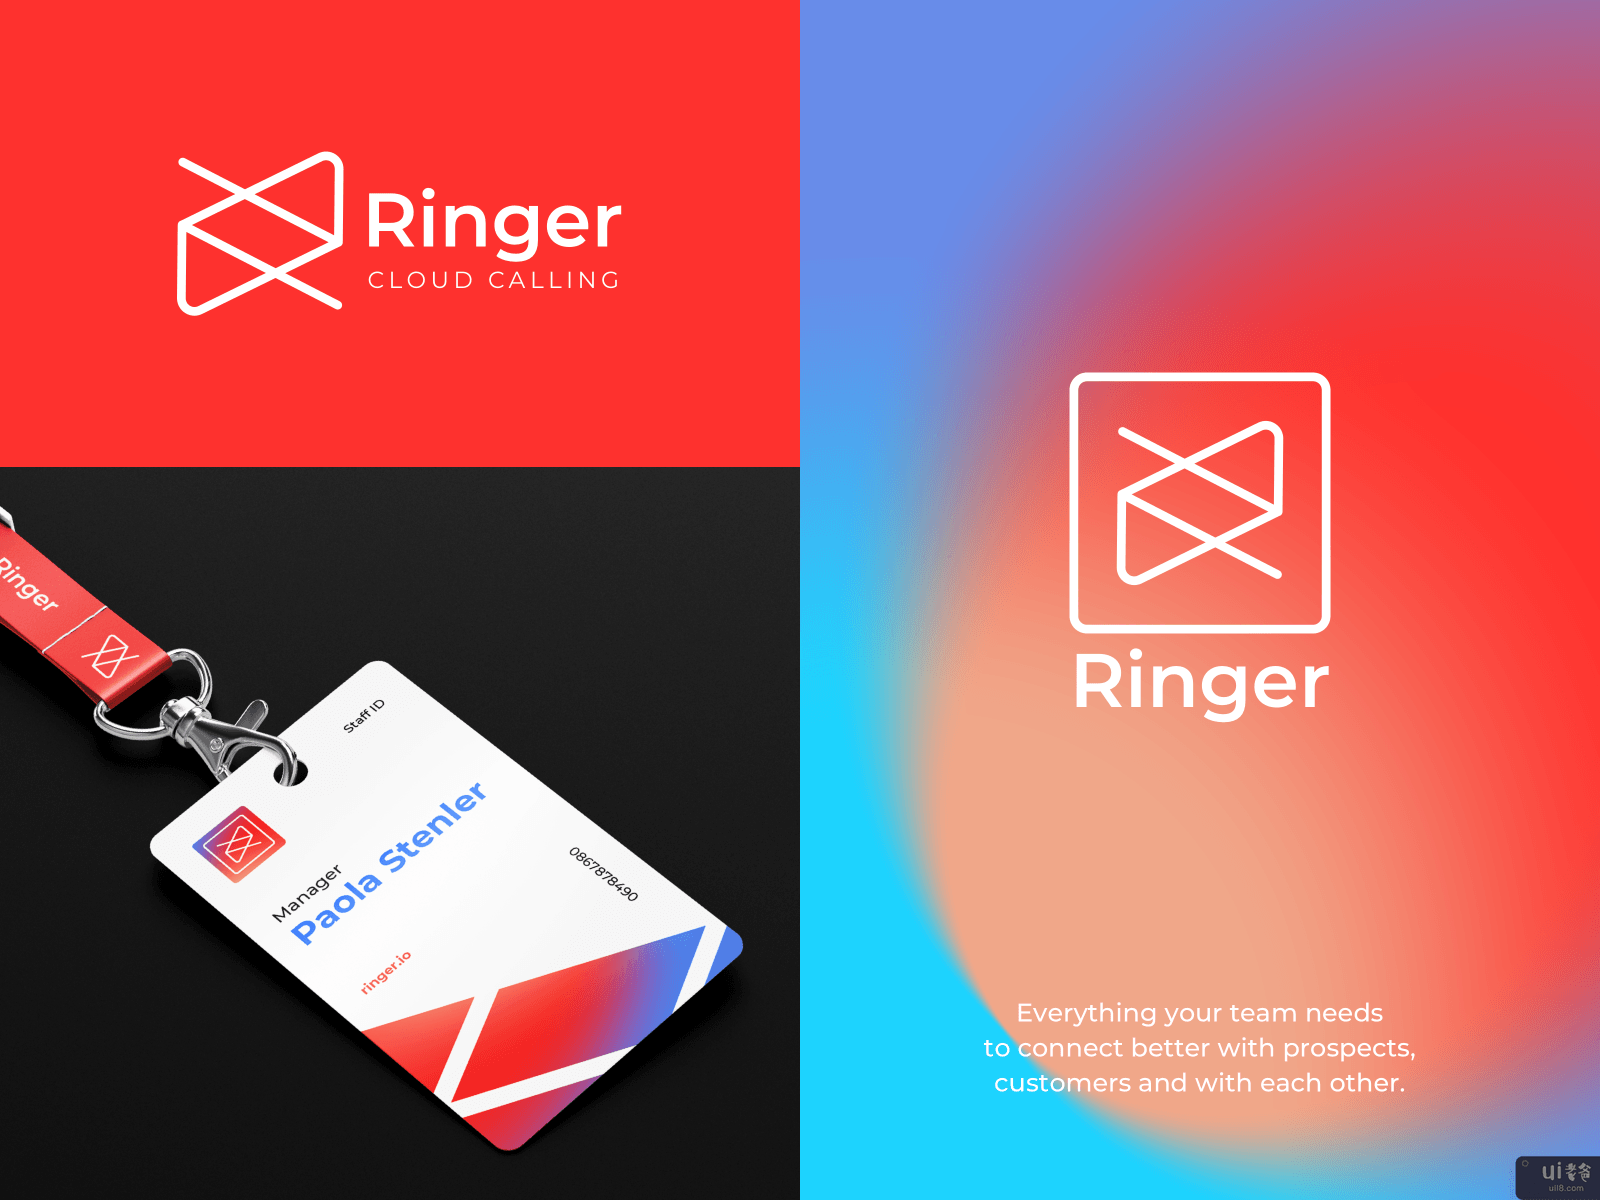 Ringer - SaaS服务的品牌设计(Ringer - Brand Design for SaaS service)插图